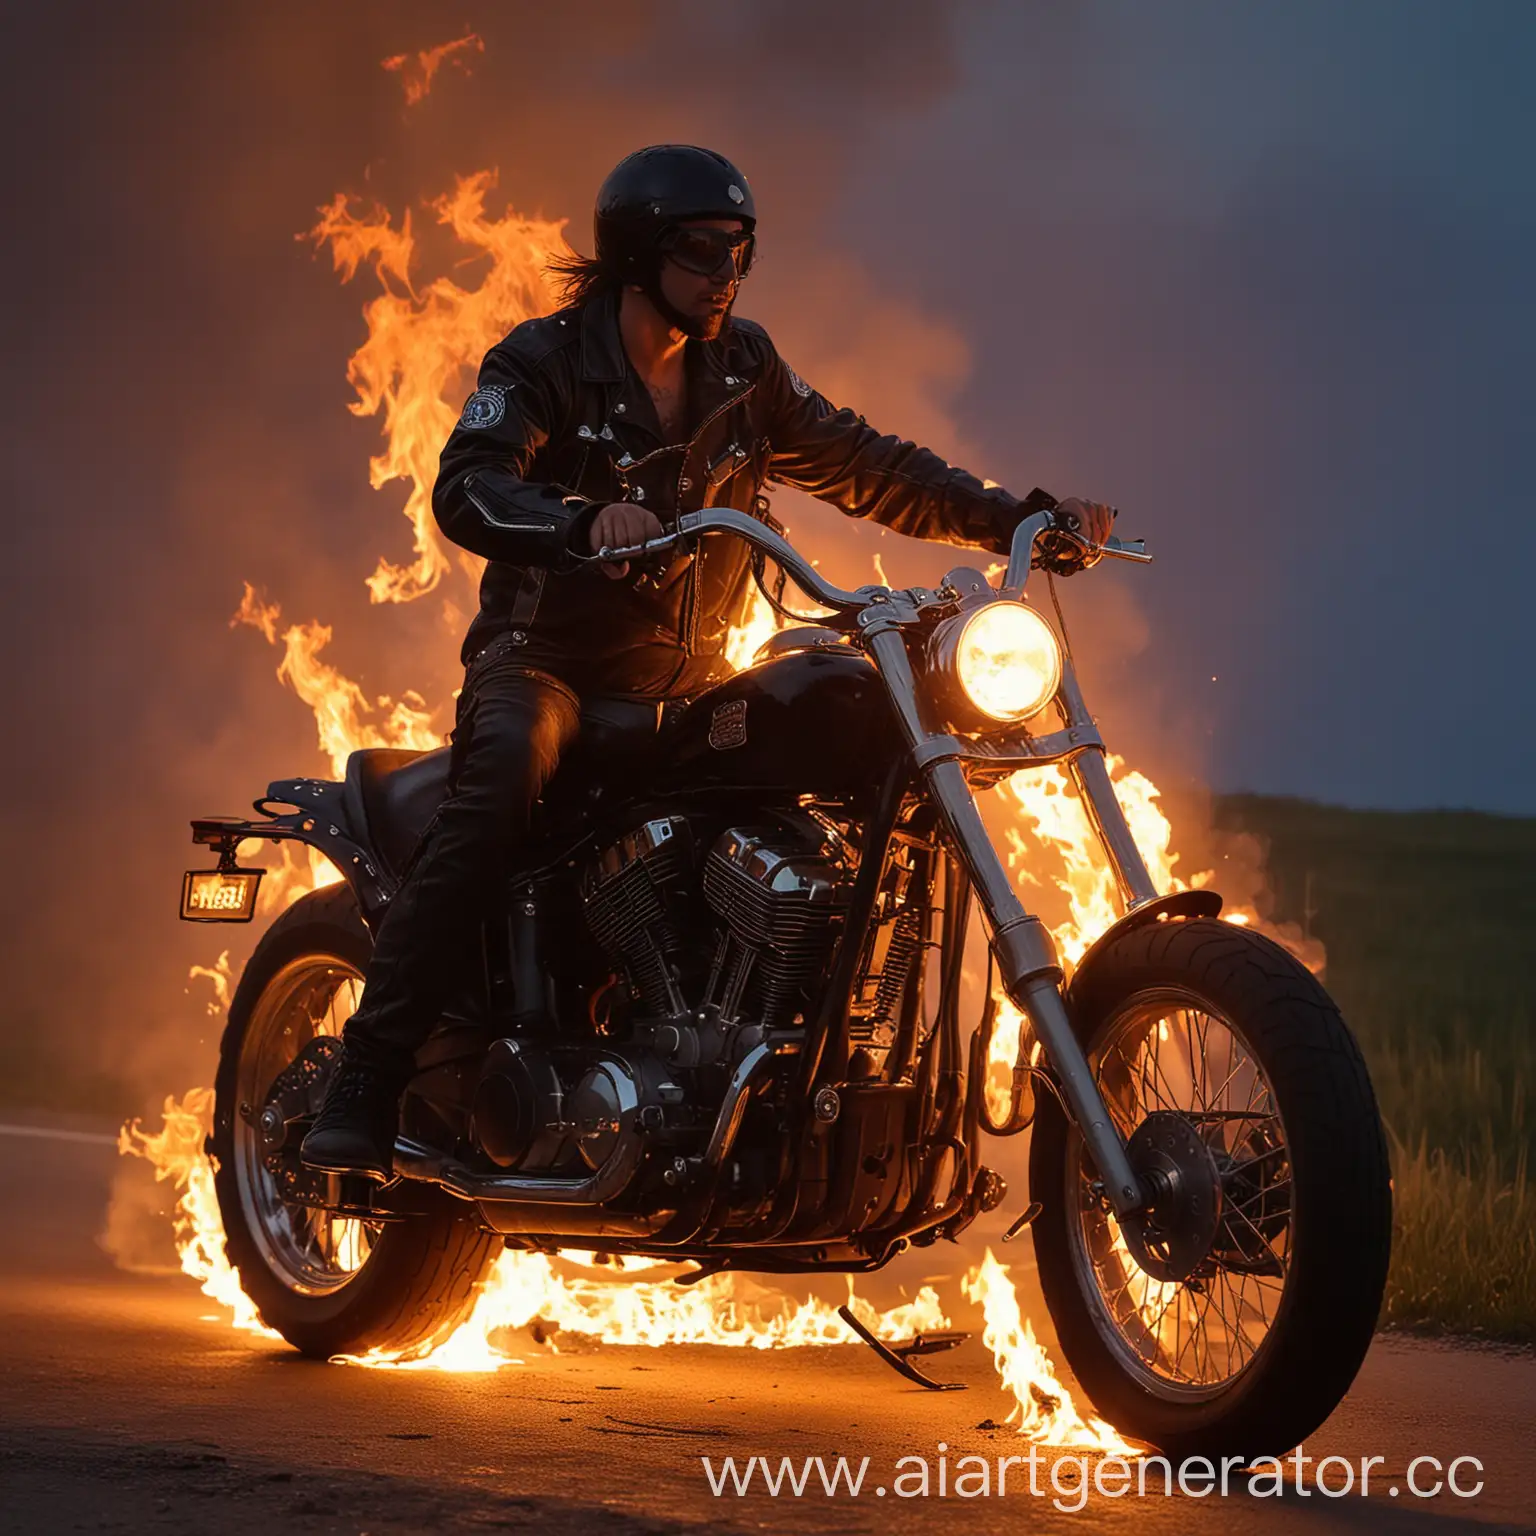 дорога. рокер-байкер на мотоцикле. сумерки. огонь